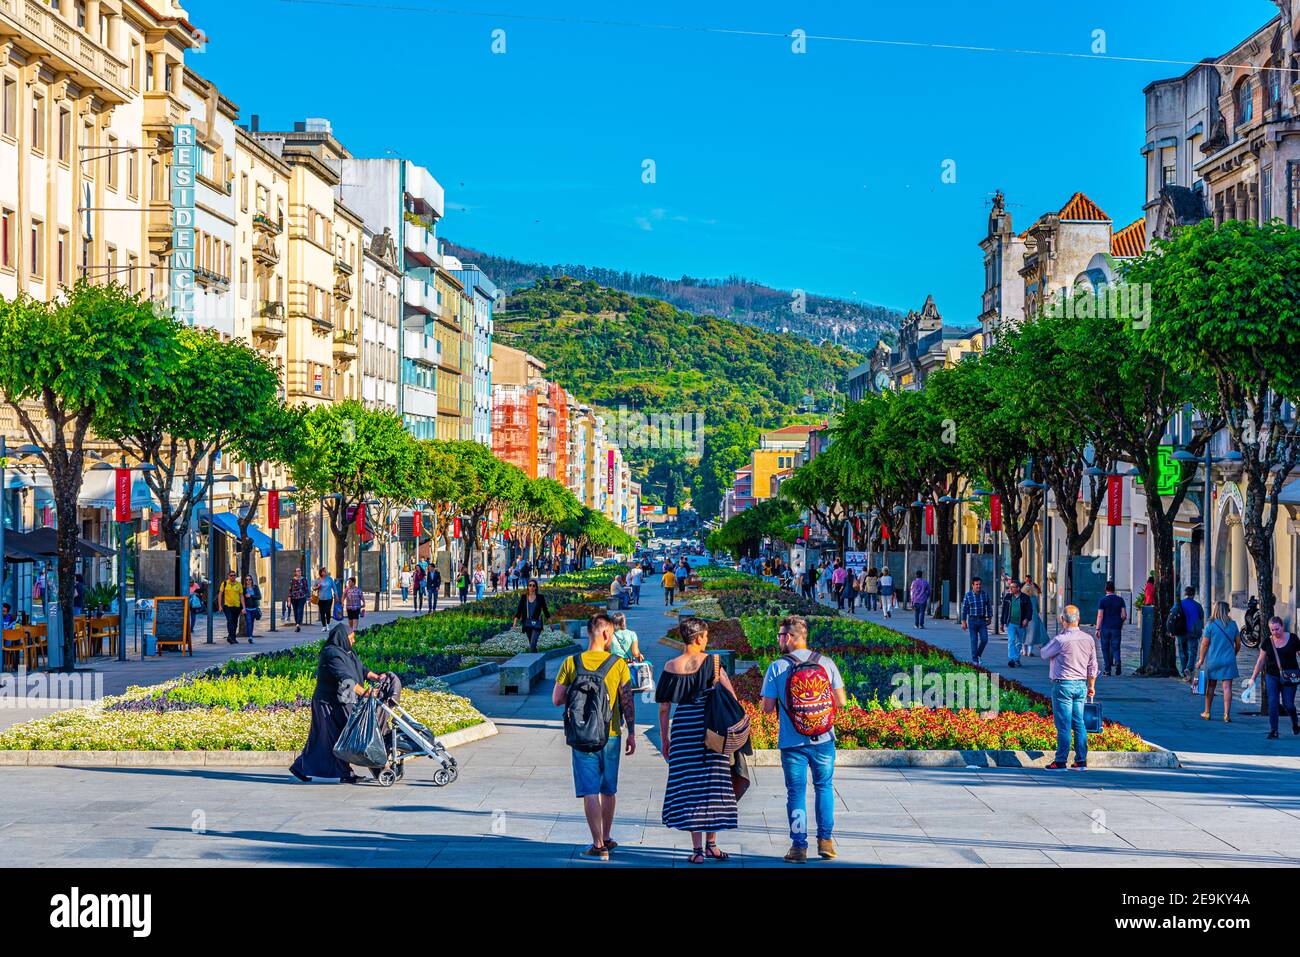 BRAGA, PORTUGAL, MAY 22, 2019: People are strolling on Avenida da Liberdade in the historical center of Braga, Portugal Stock Photo